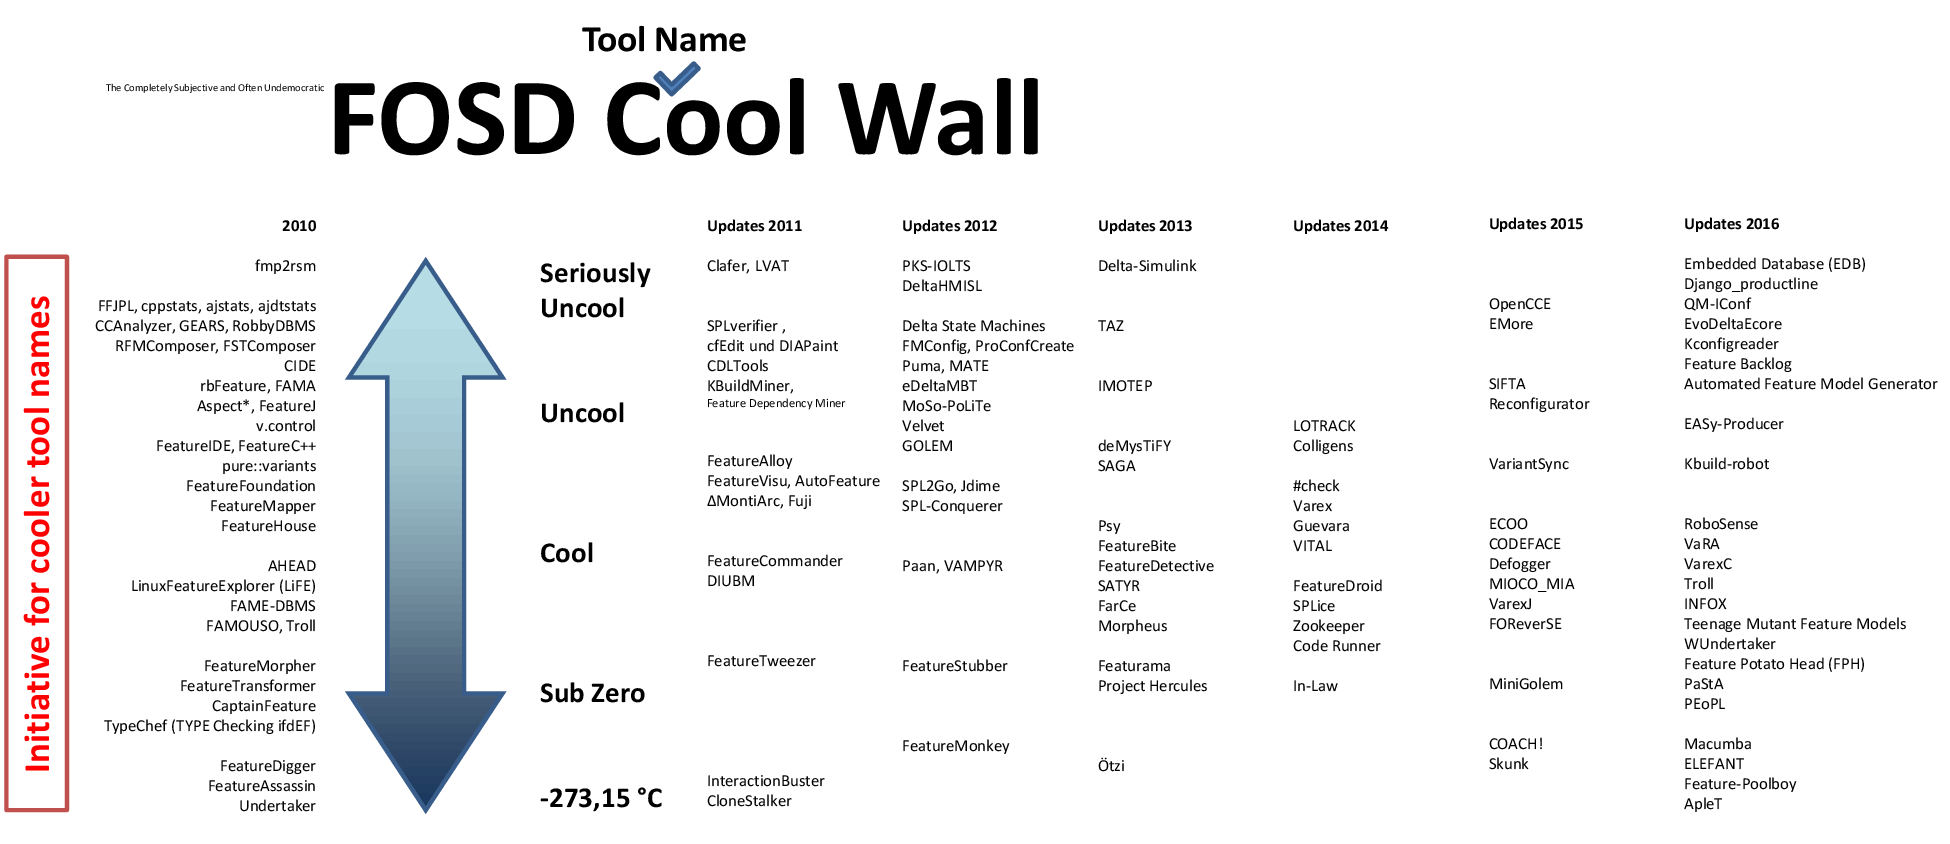 Cool Wall 2016